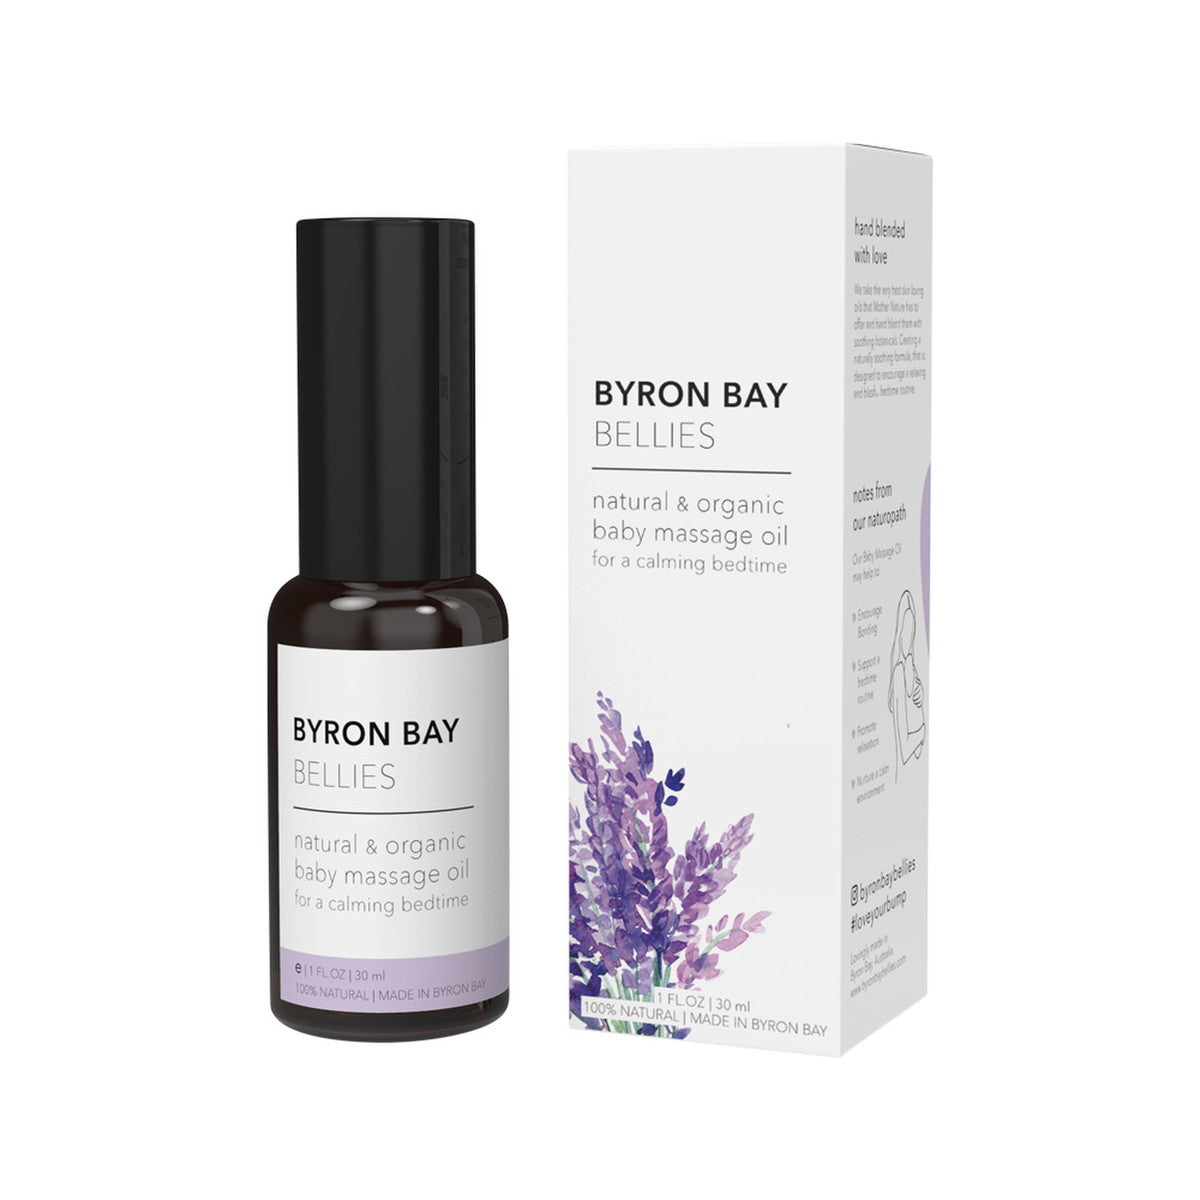 Byron Bay Bellies - Baby Massage Oil Sweet Dreams